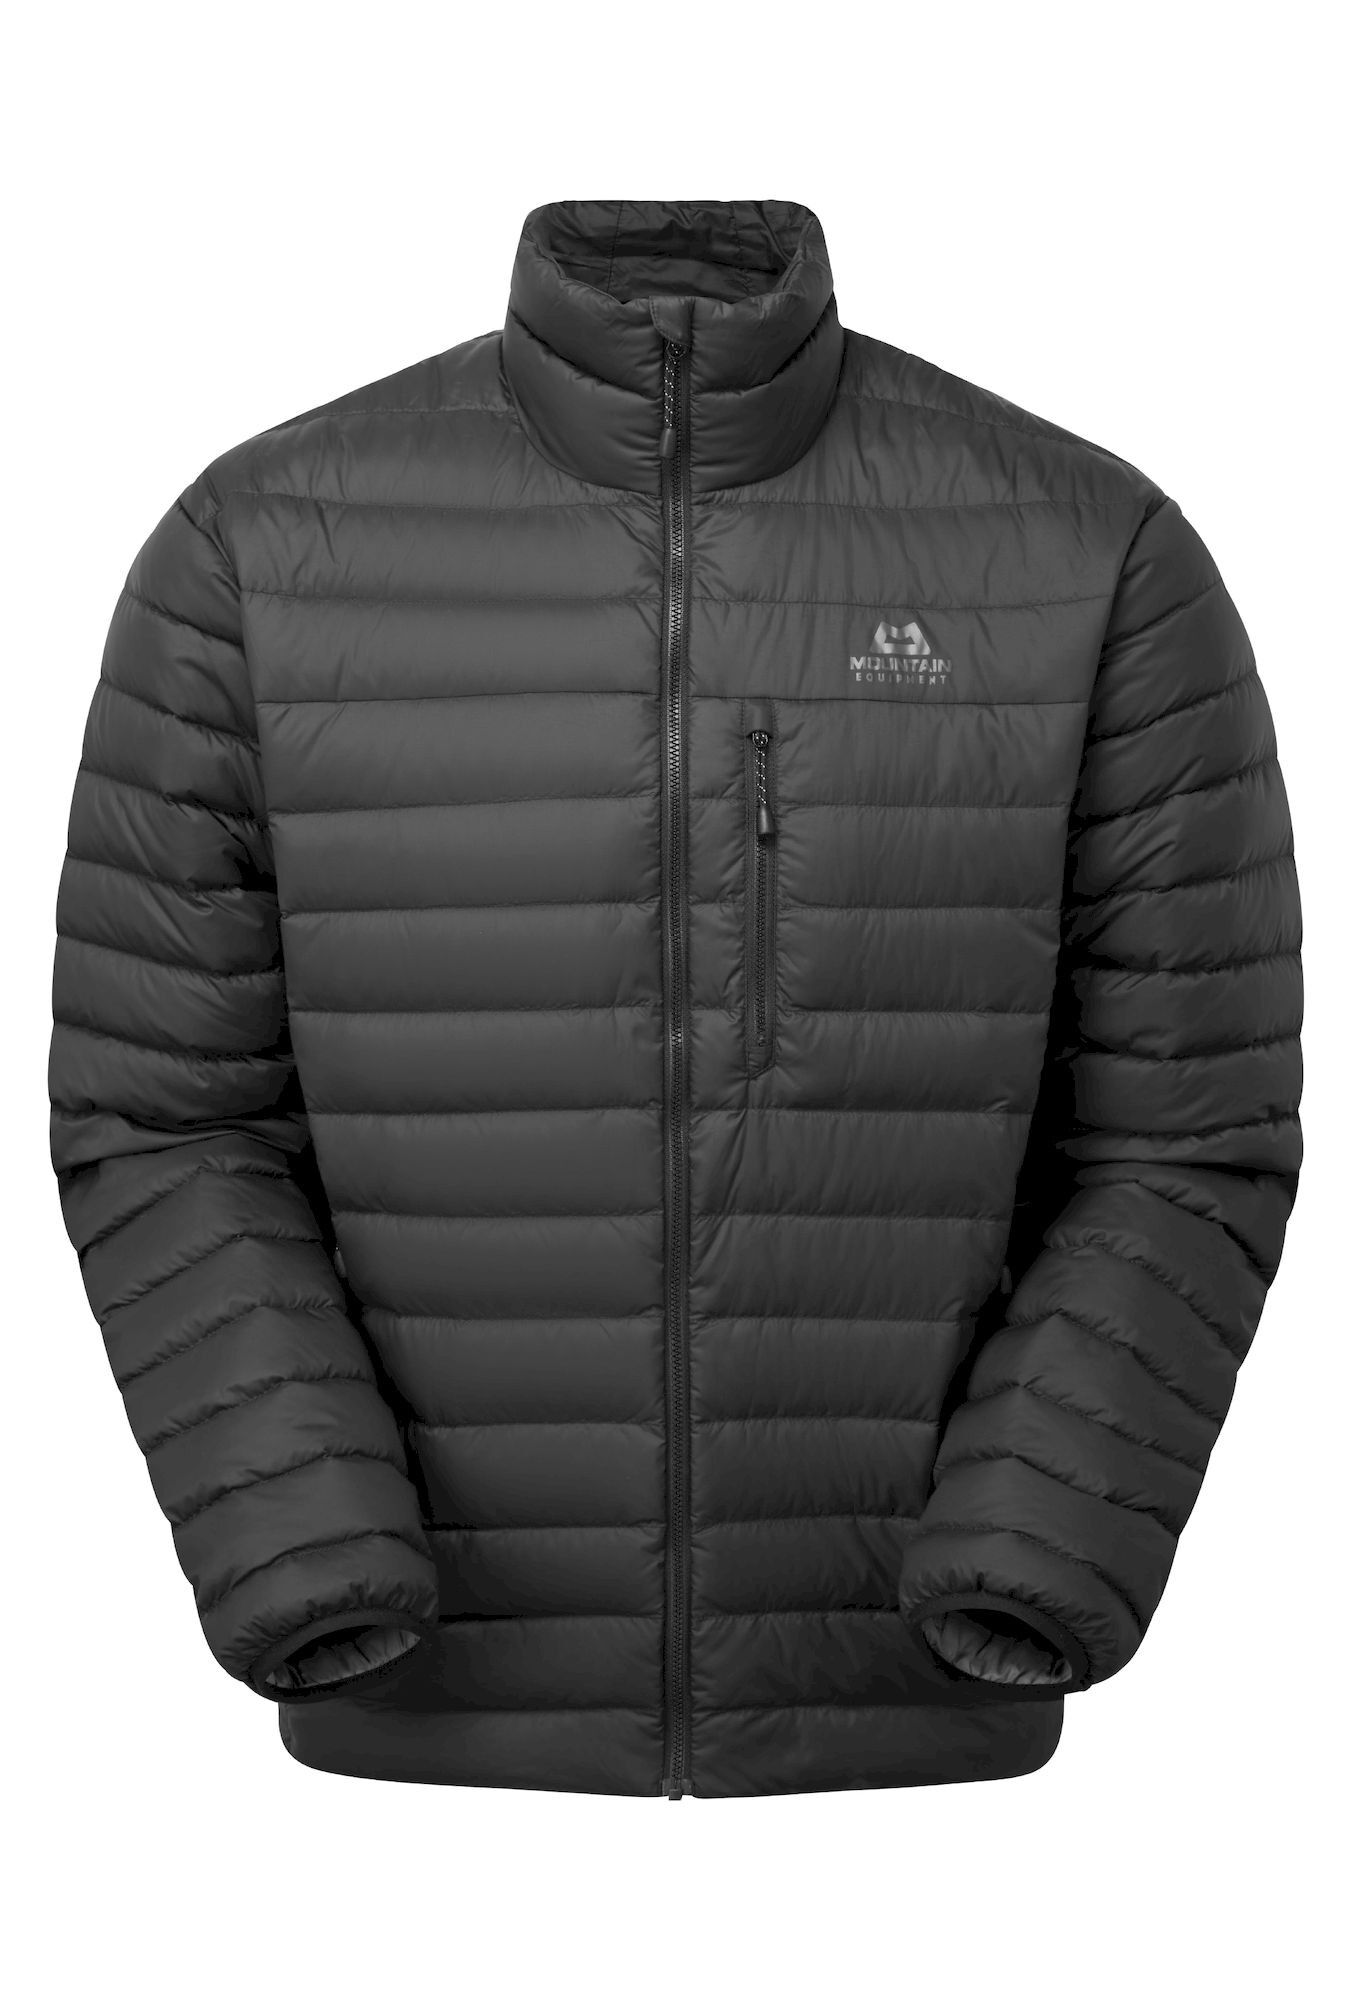 Mountain Equipment Earthrise Jacket - Down jacket - Men's | Hardloop